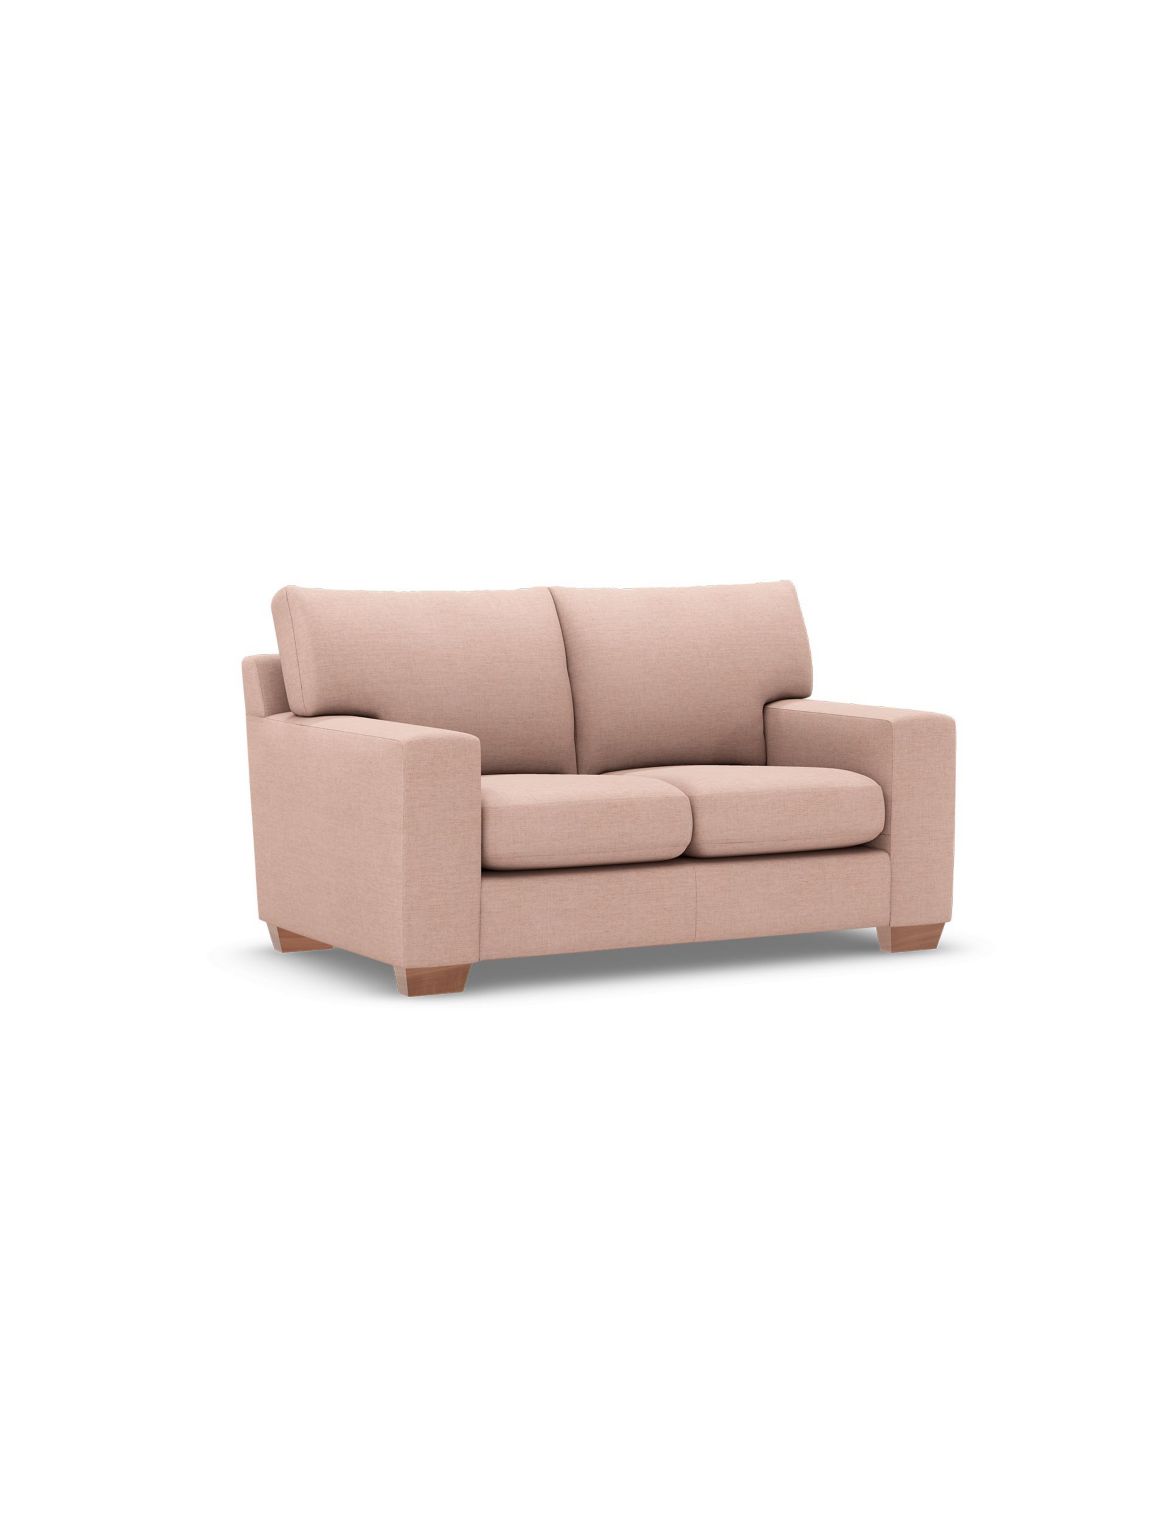 Alfie Compact Sofa pink